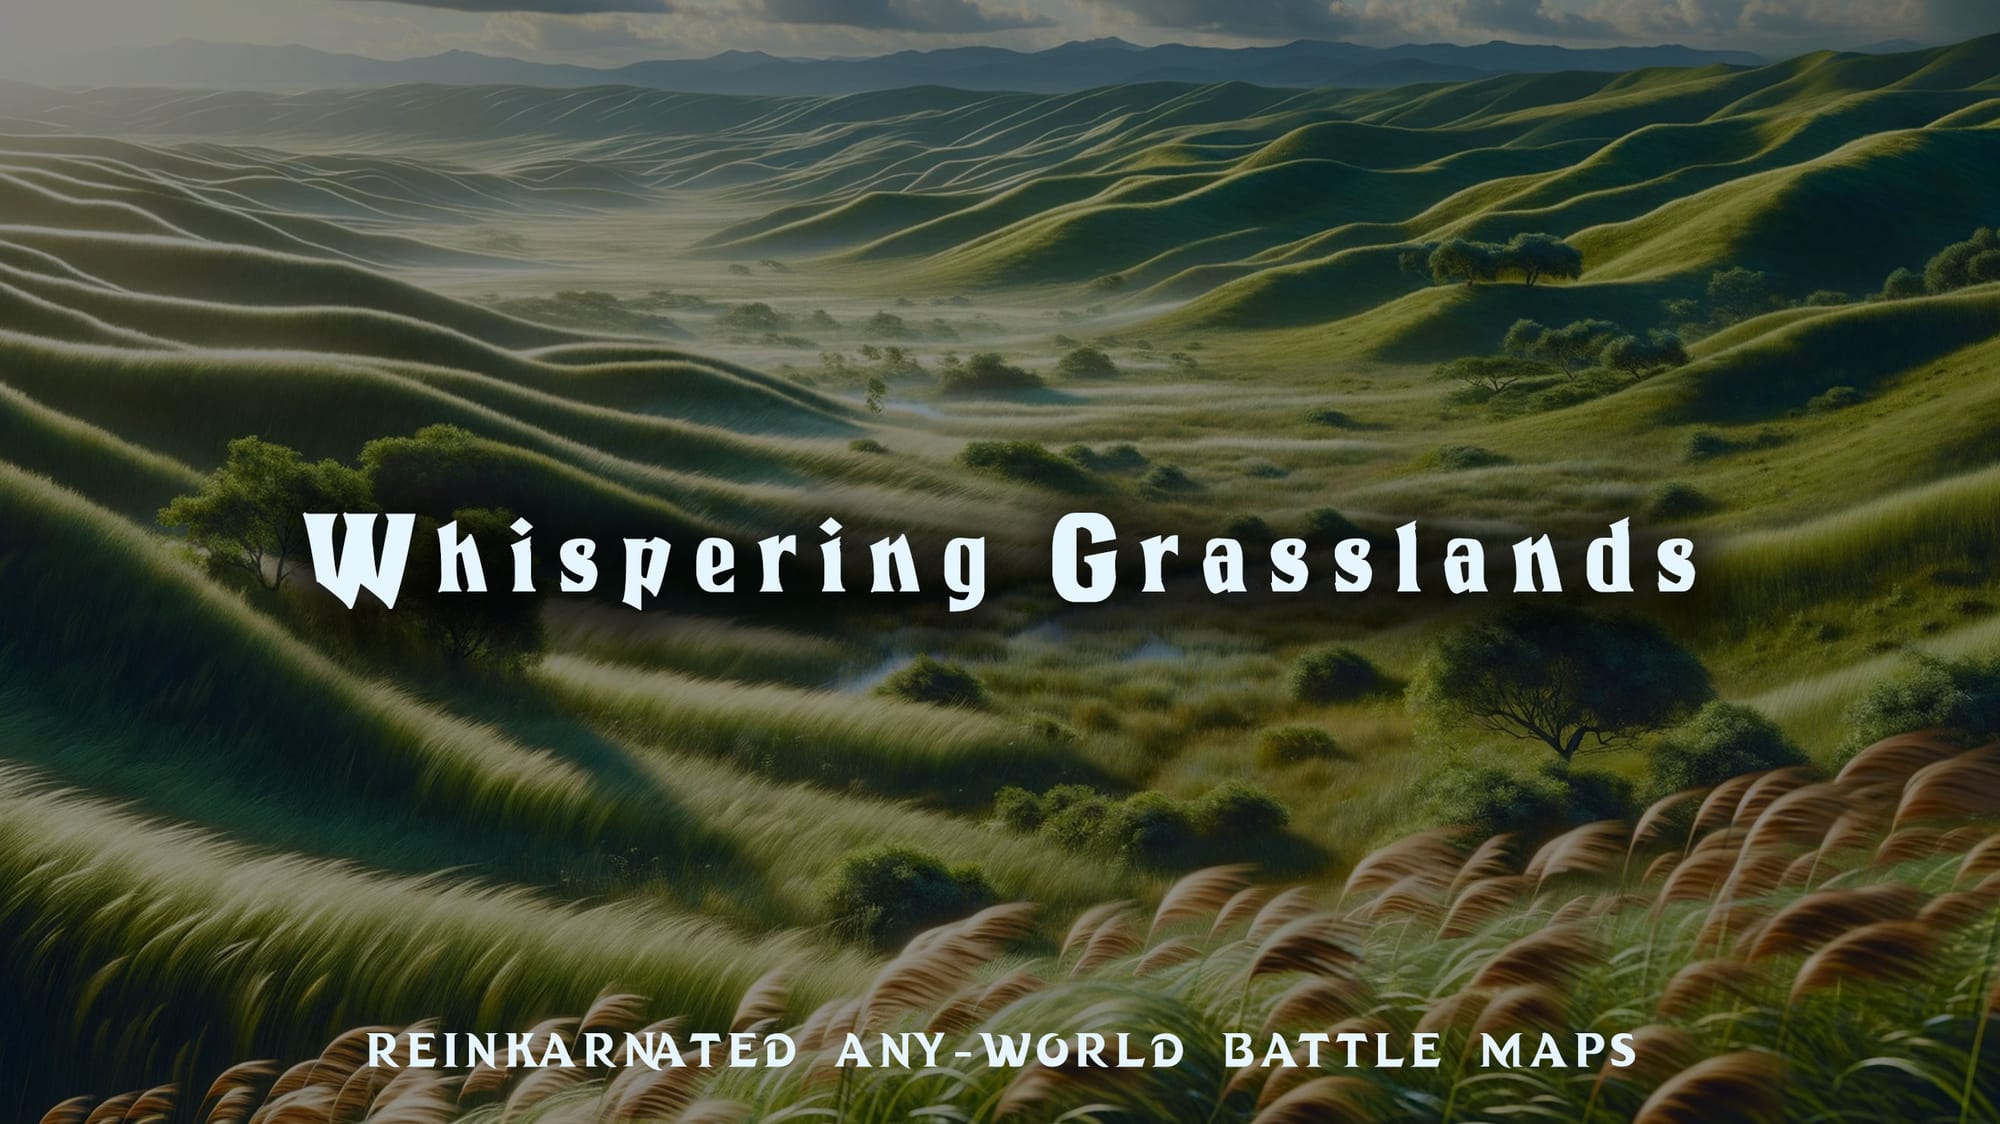 Whispering Grasslands